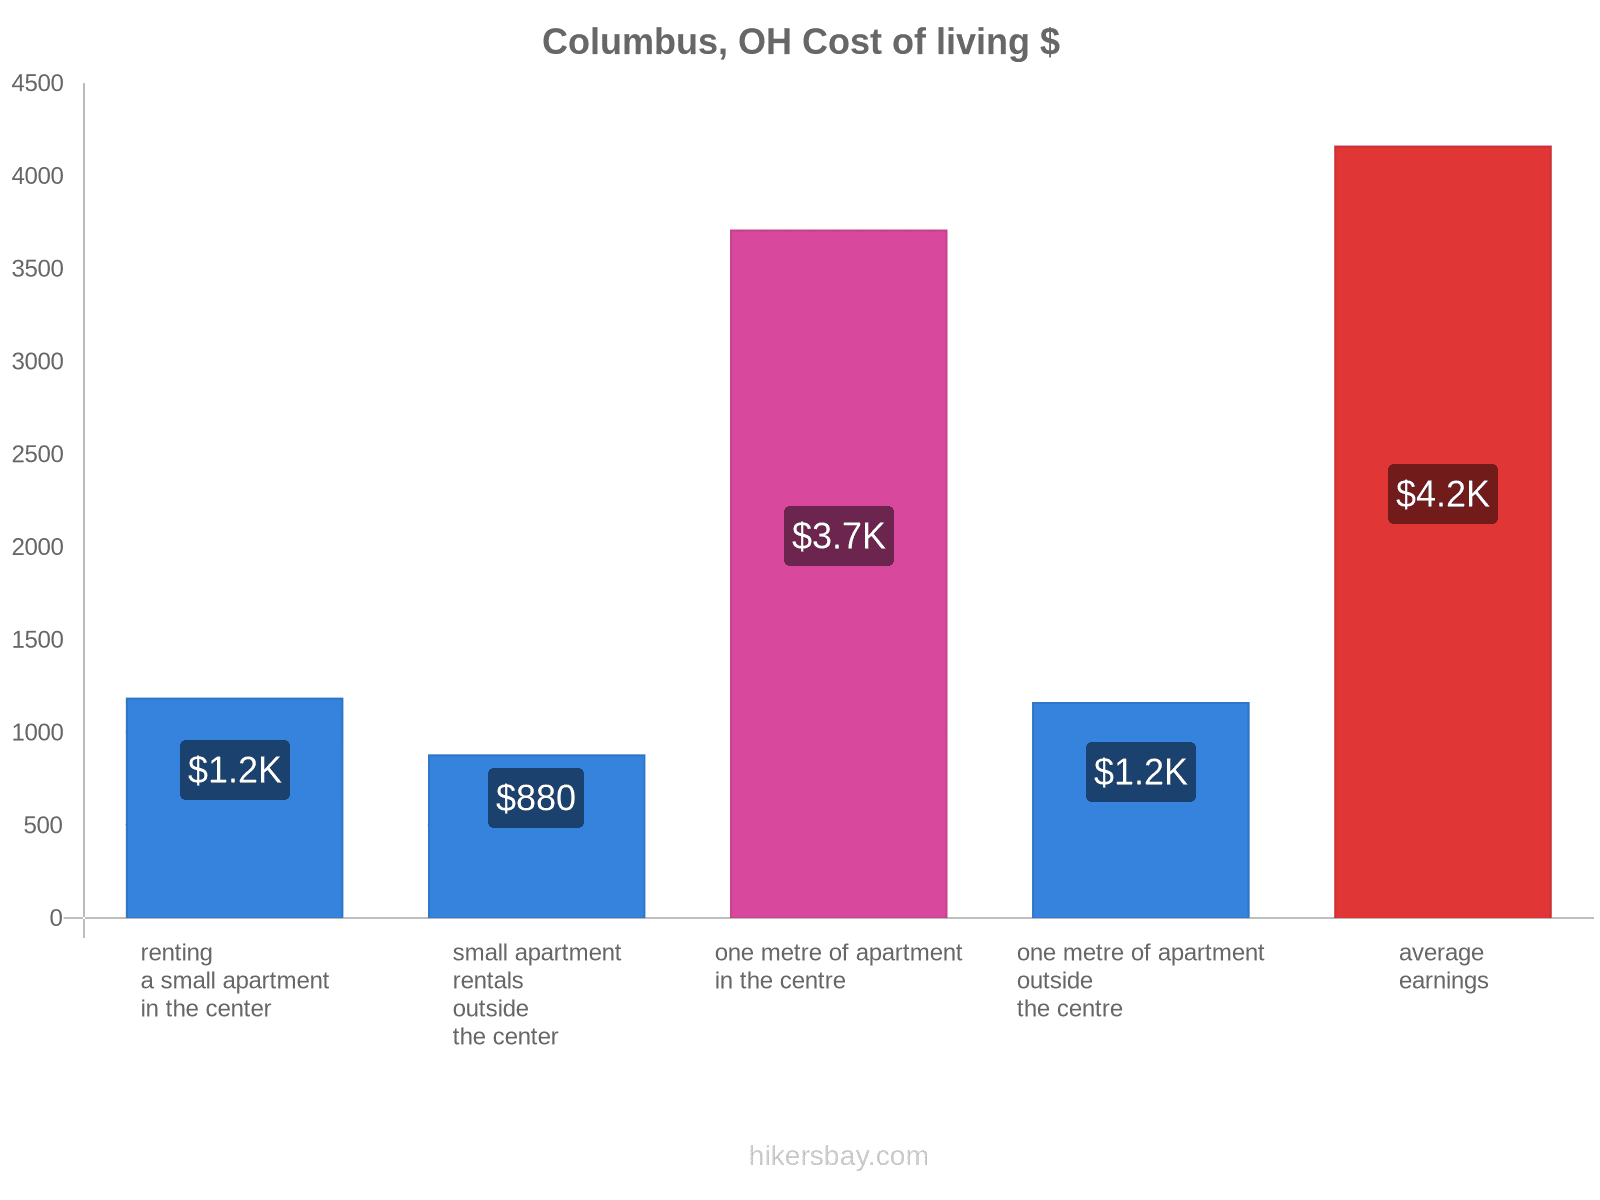 Columbus, OH cost of living hikersbay.com